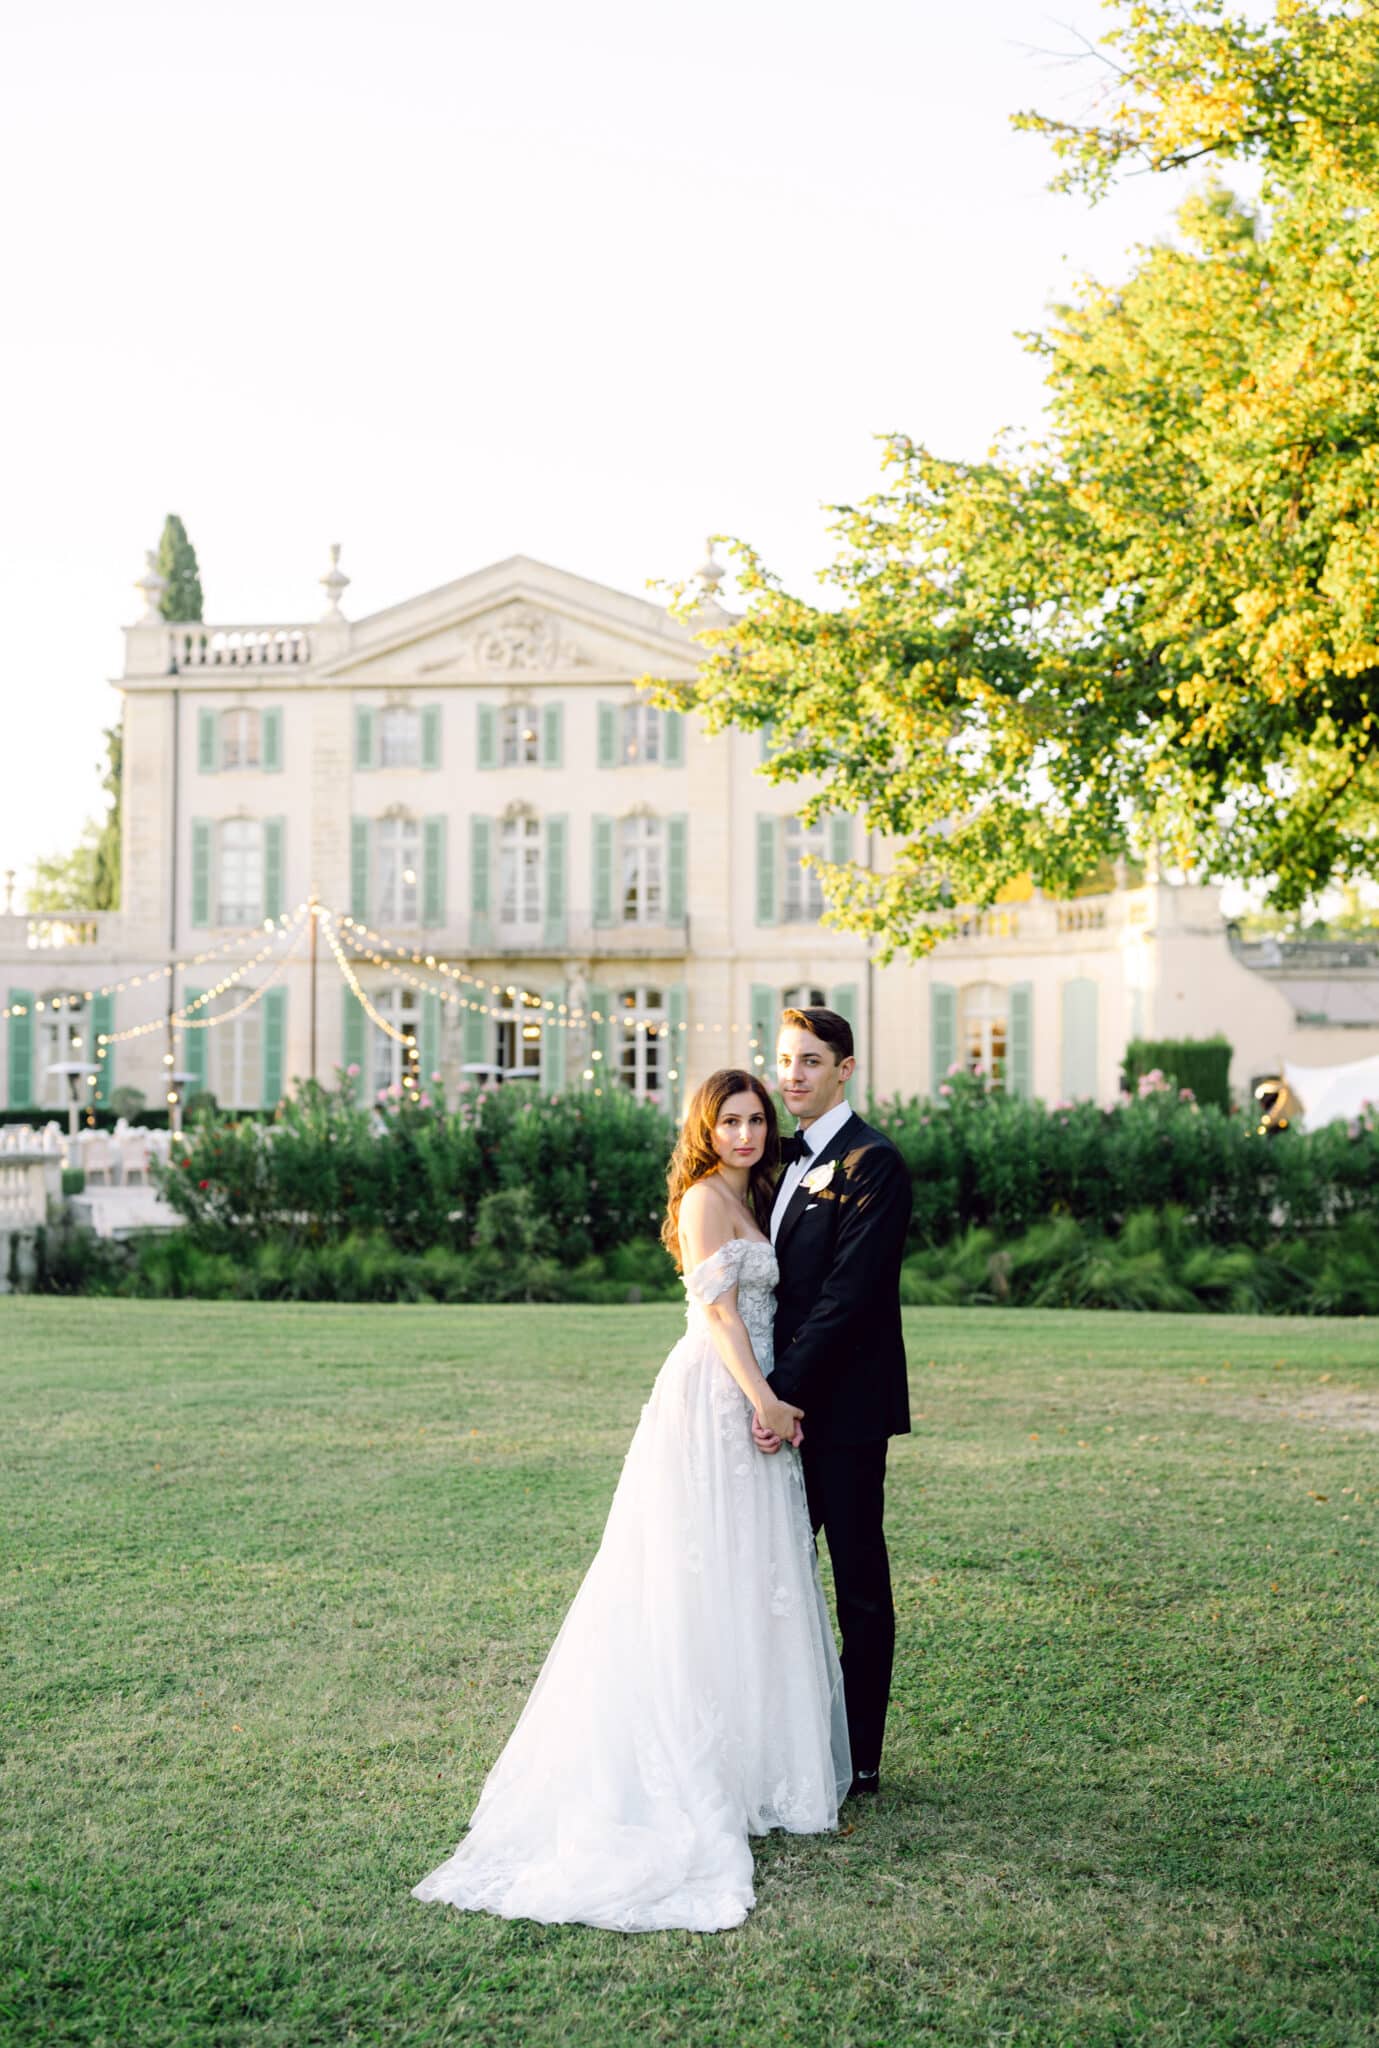 Chateau de Tourreau bride and groom - Wedding Planner Provence